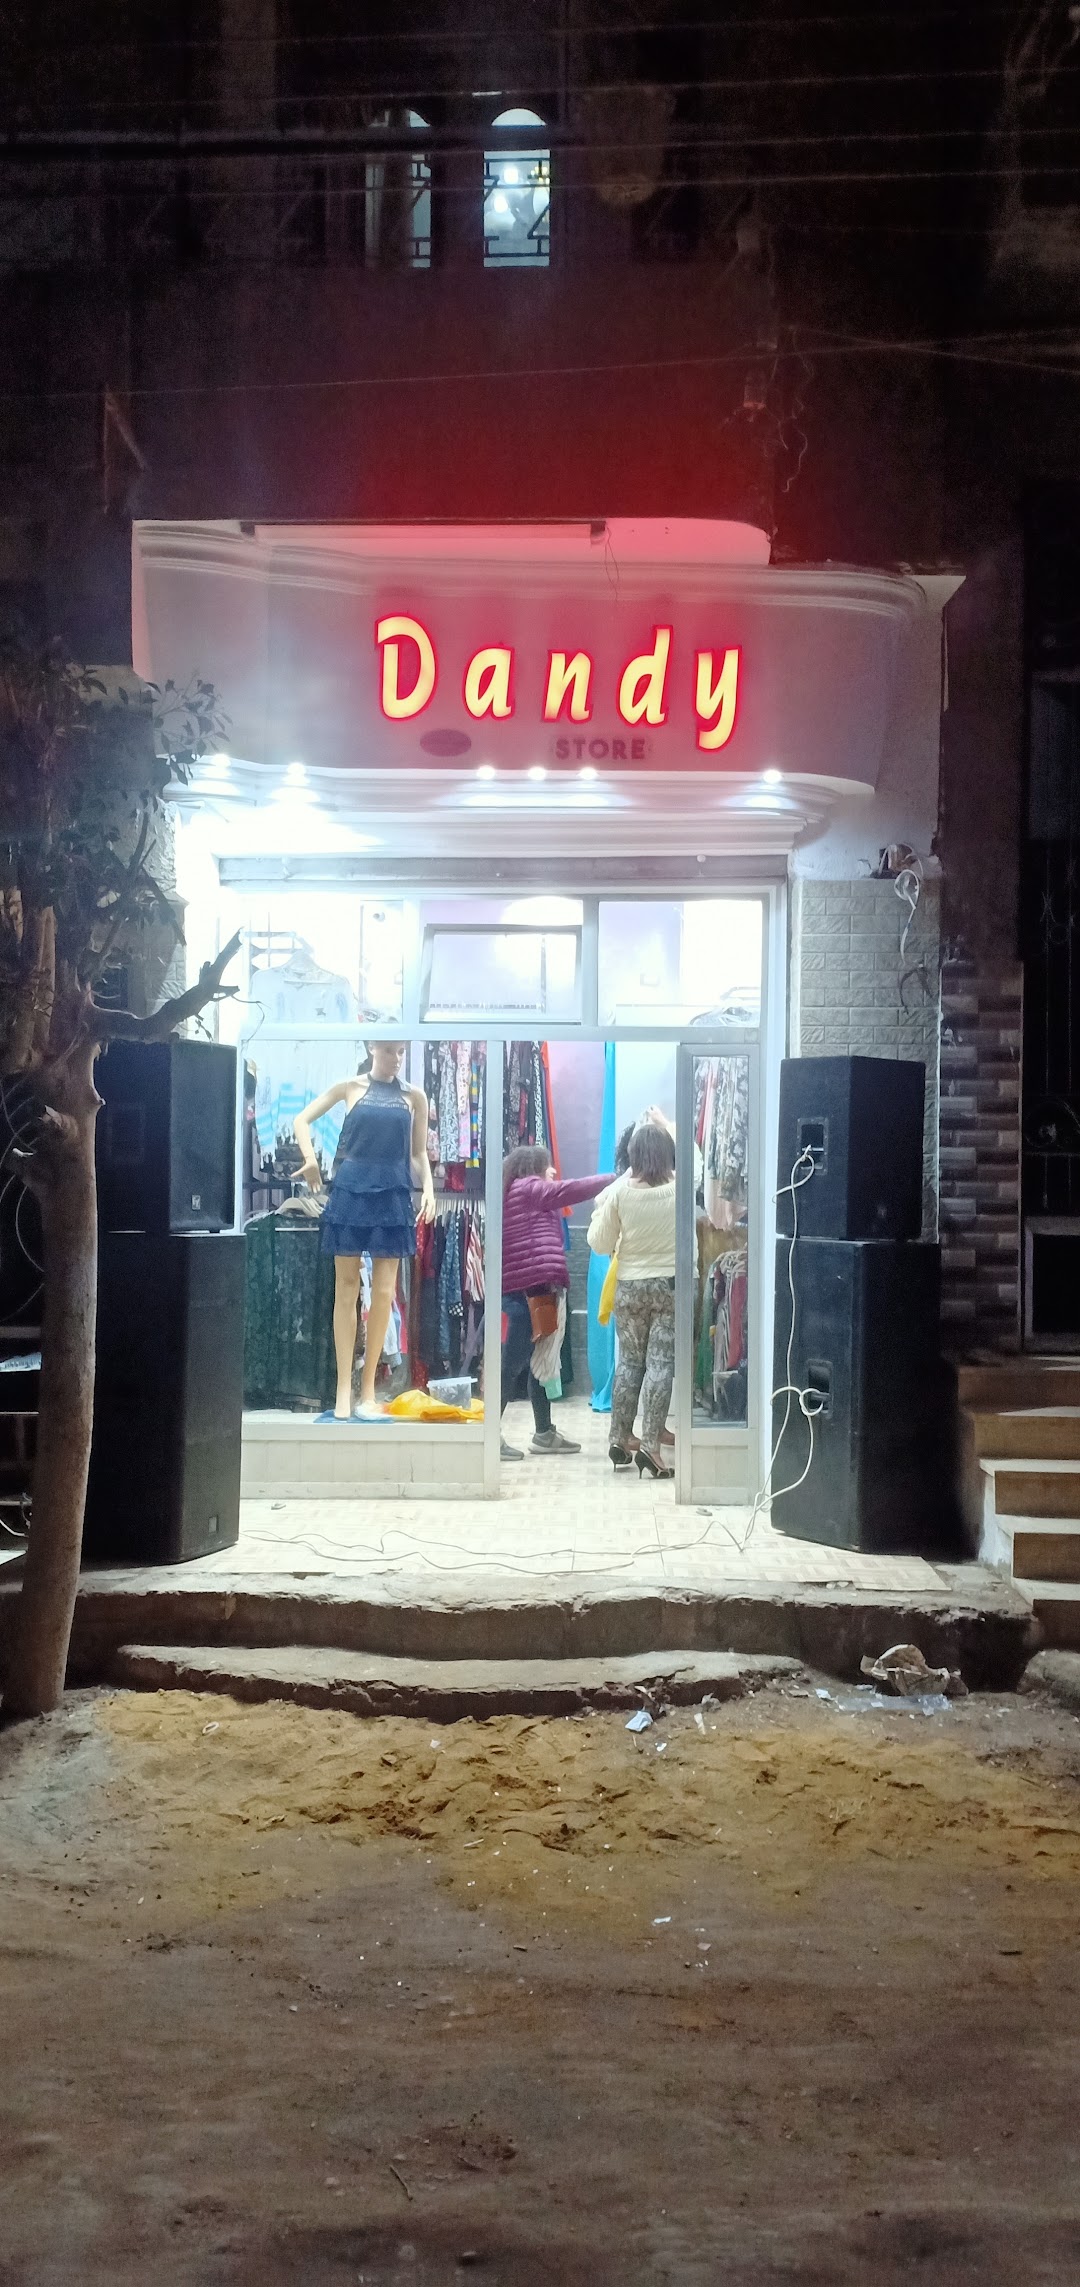 dandy store